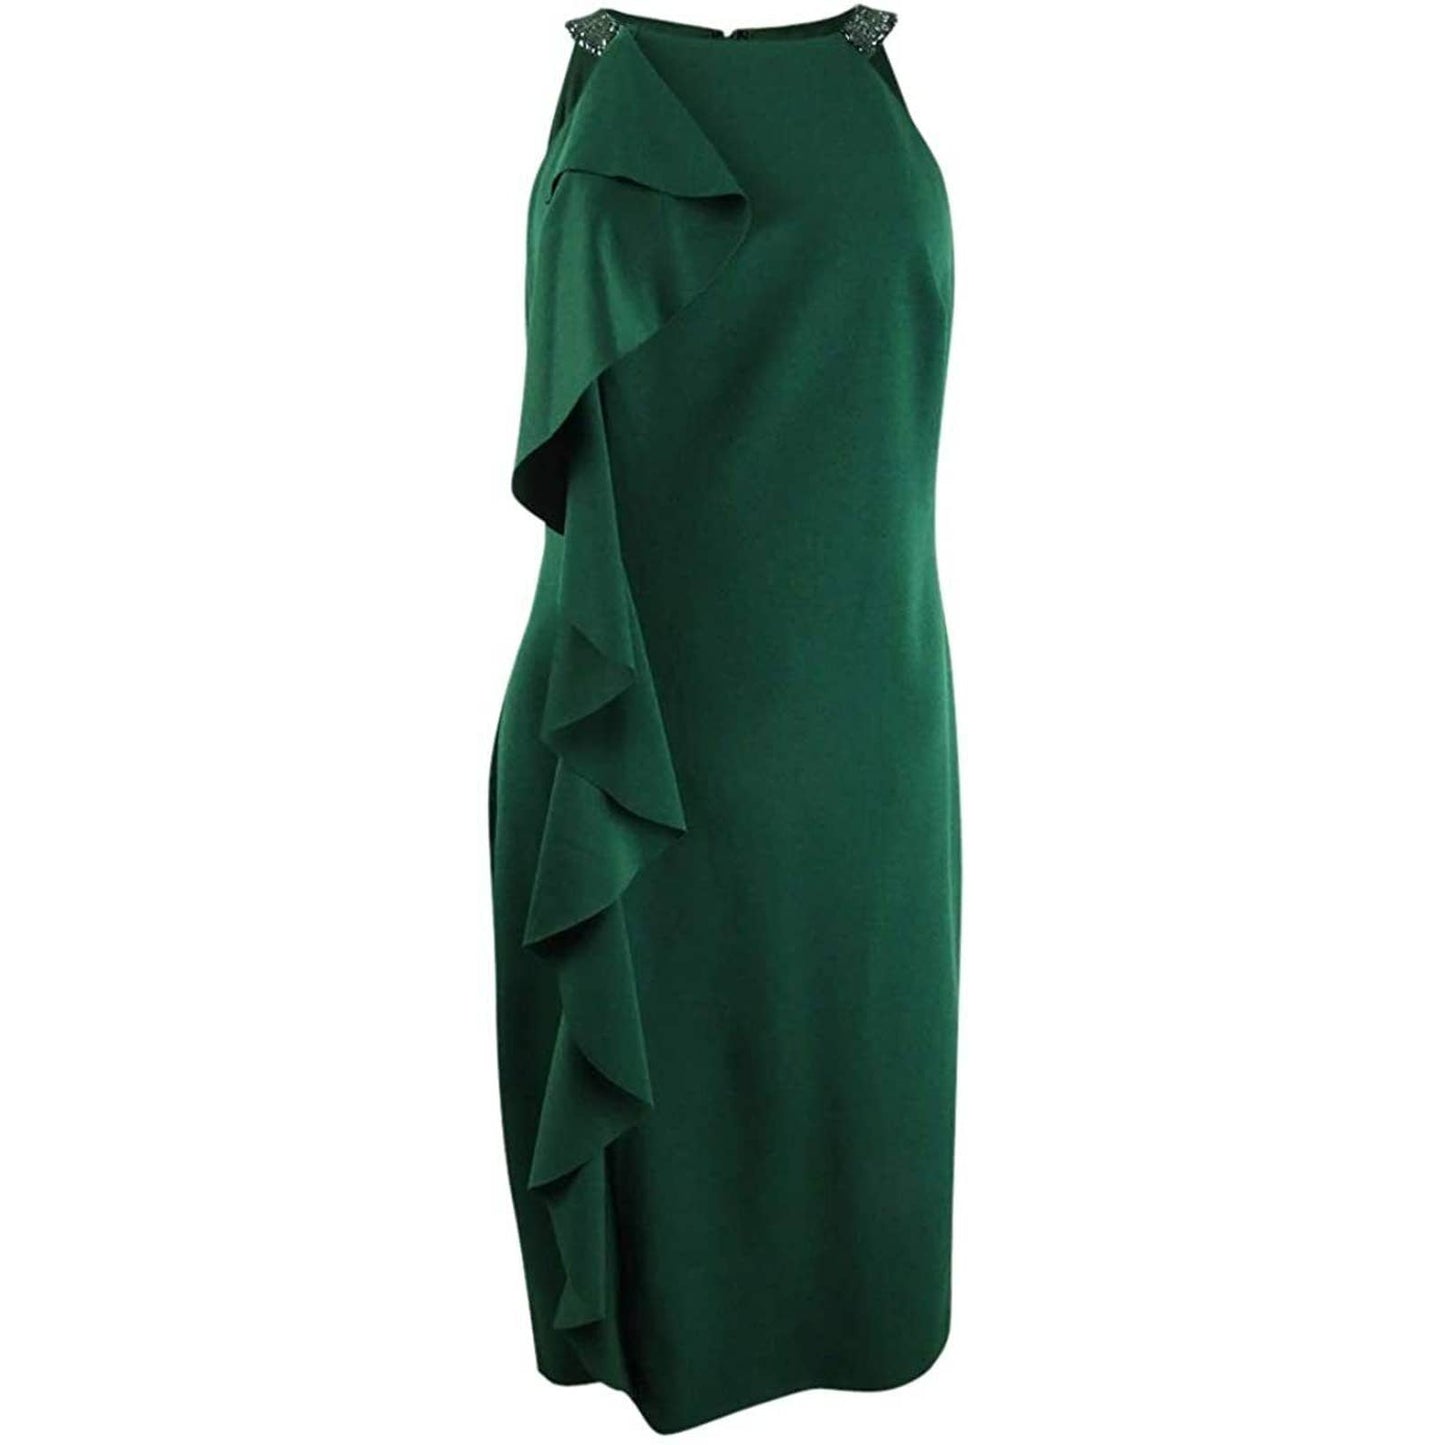 LAUREN RALPH LAUREN WOMEN'S KNOELYN COCKTAIL DRESS, DARK FERN GREEN NWT $175